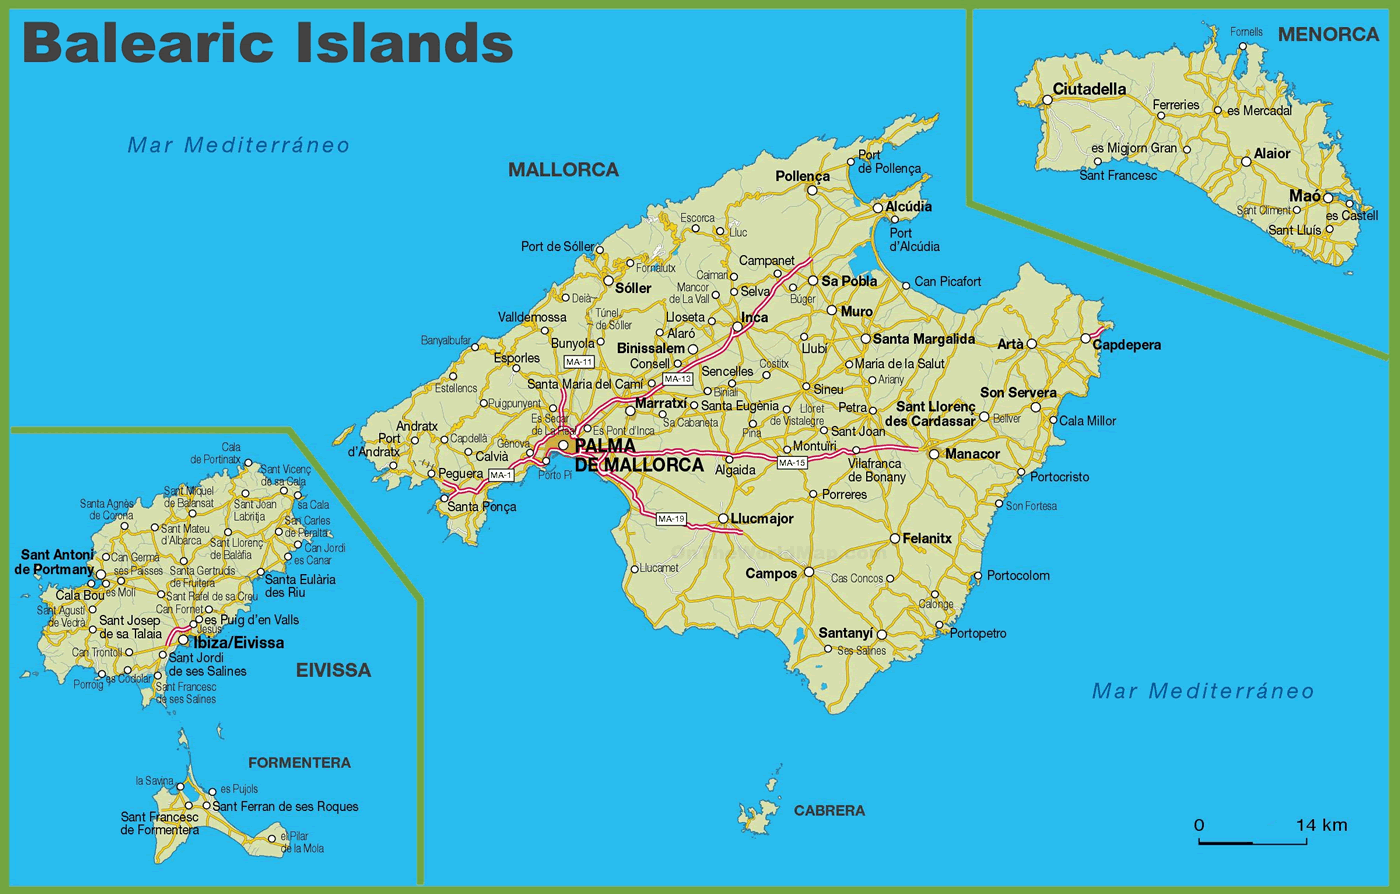 Mapa das Ilhas Baleares